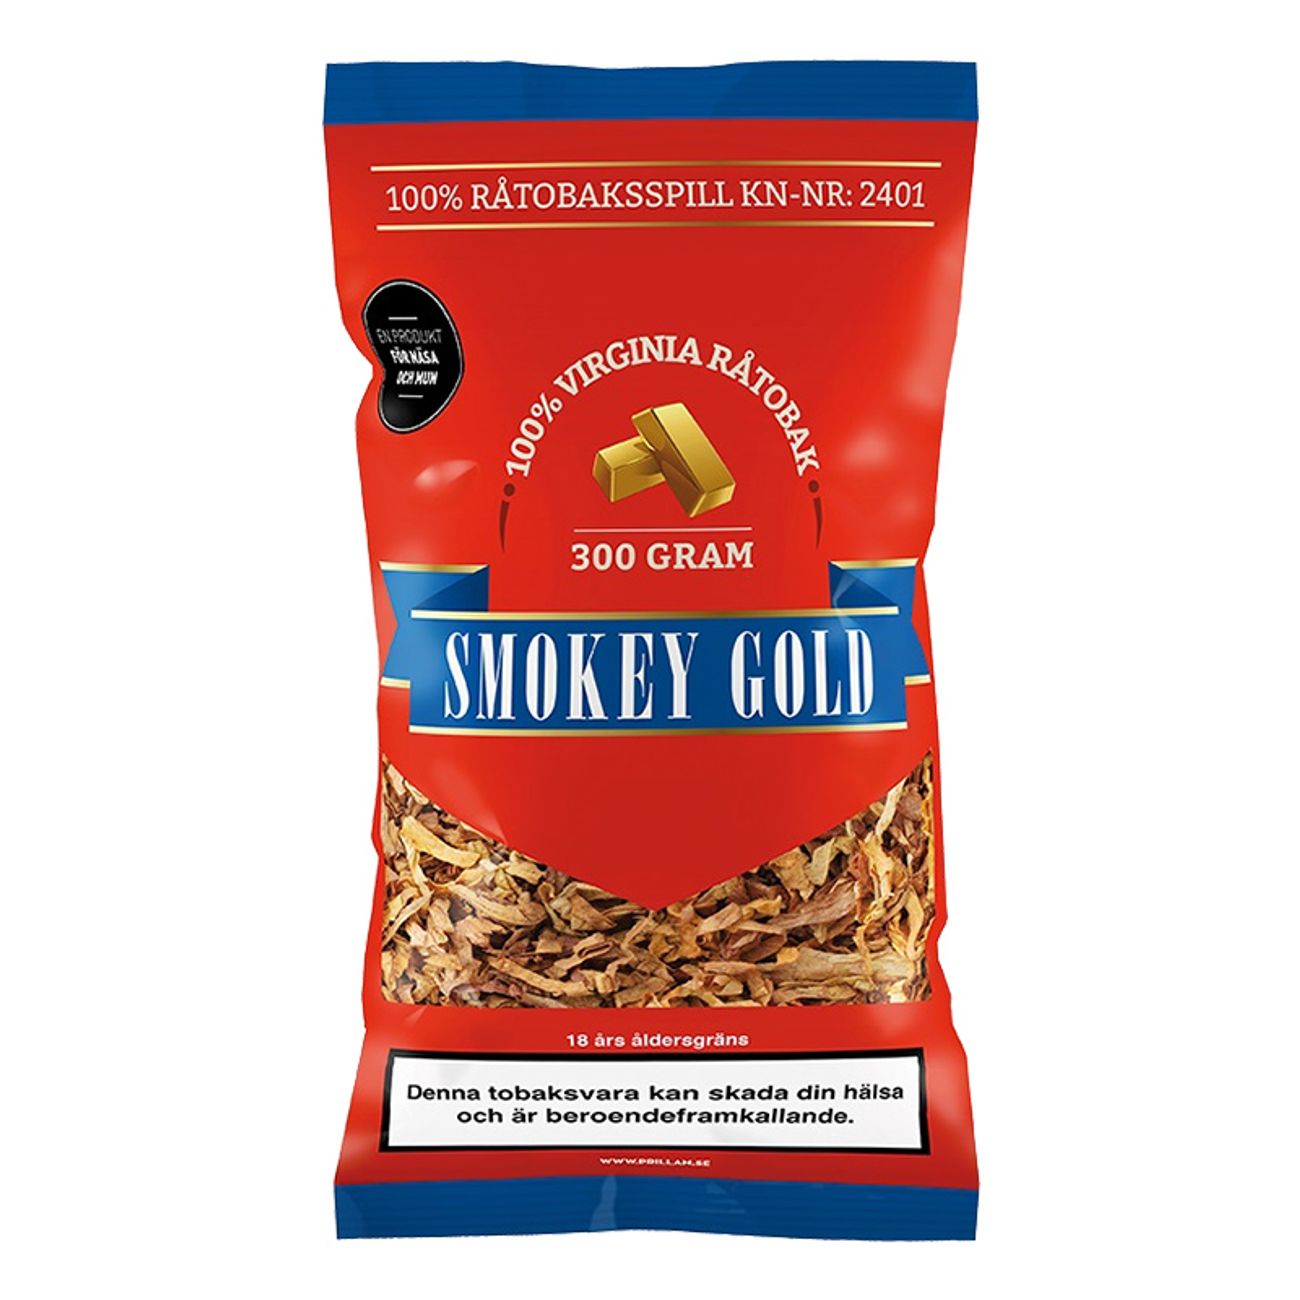 smokey-gold-ratobak-2